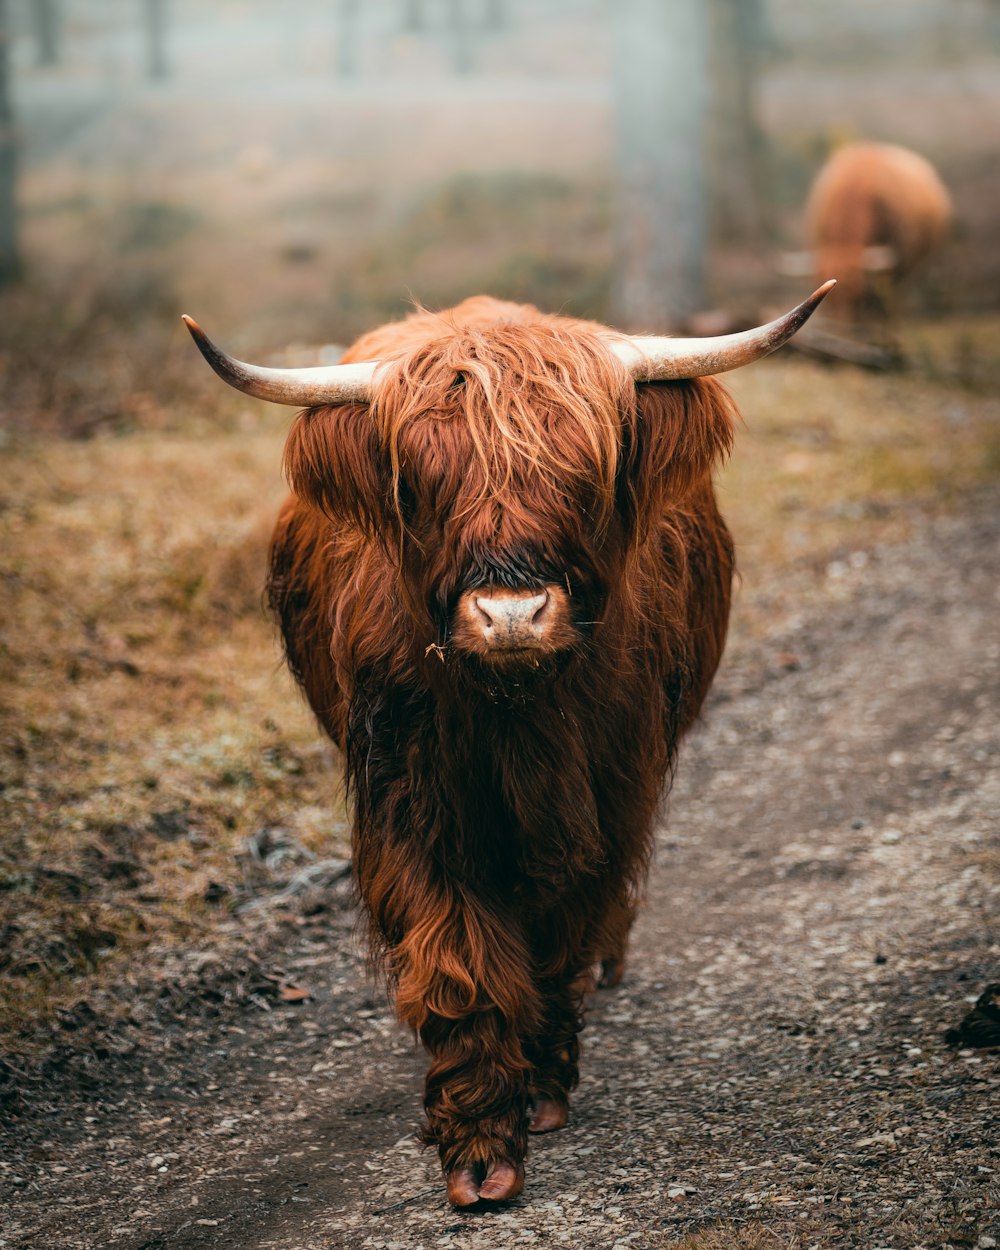 a large brown bull walking down a dirt road